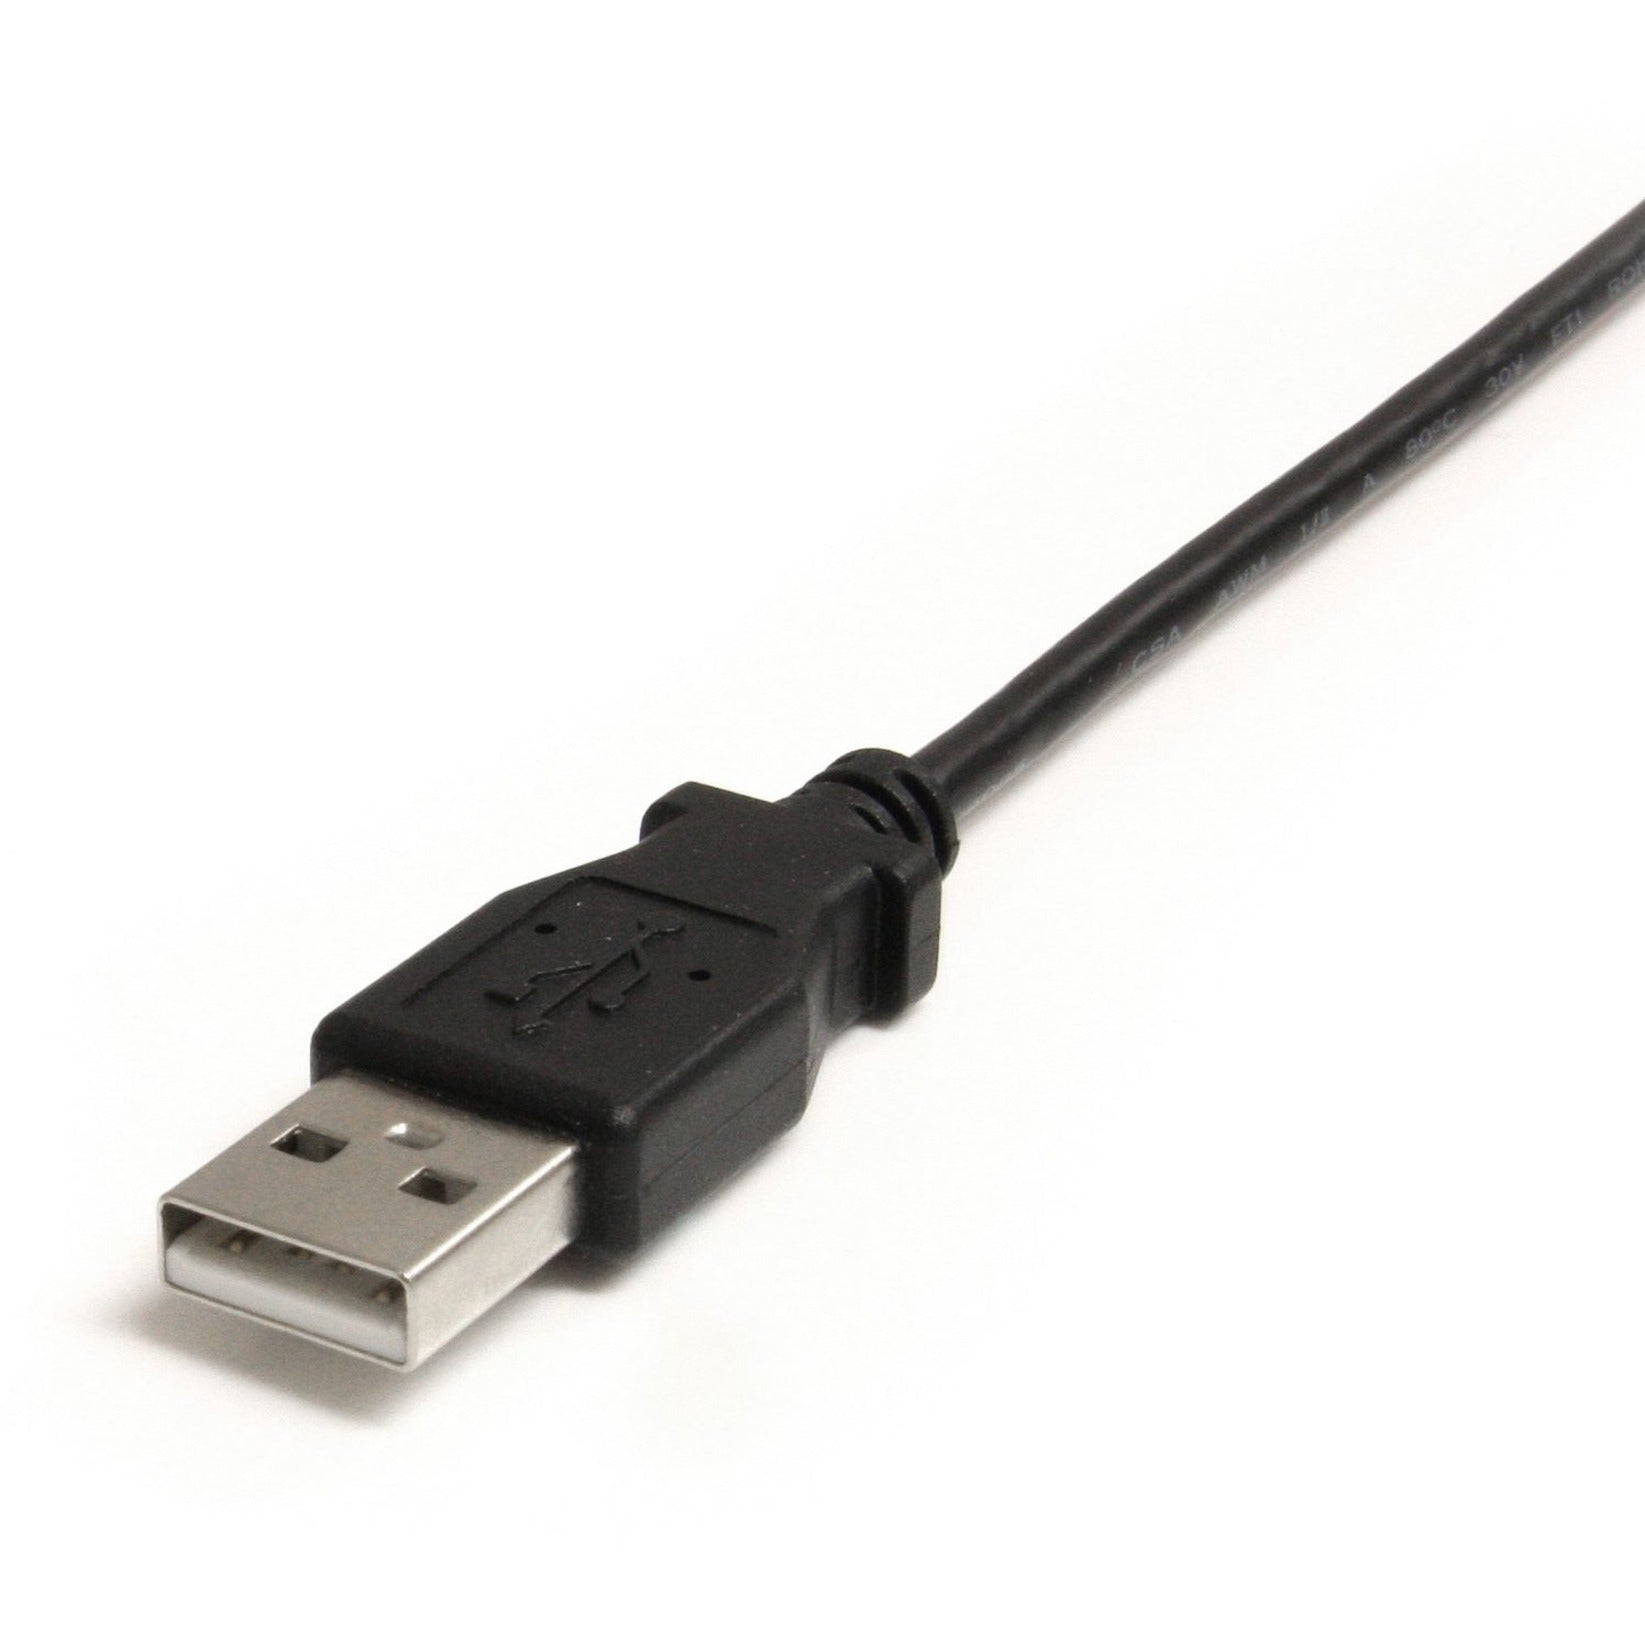 StarTech.com USB2HABM6RA 6英尺 迷你USB电缆 - A到直角迷你B，充电，模塑，480兆比特/秒数据传输速率 品牌名称：StarTech.com 翻译品牌名称：科技星Com